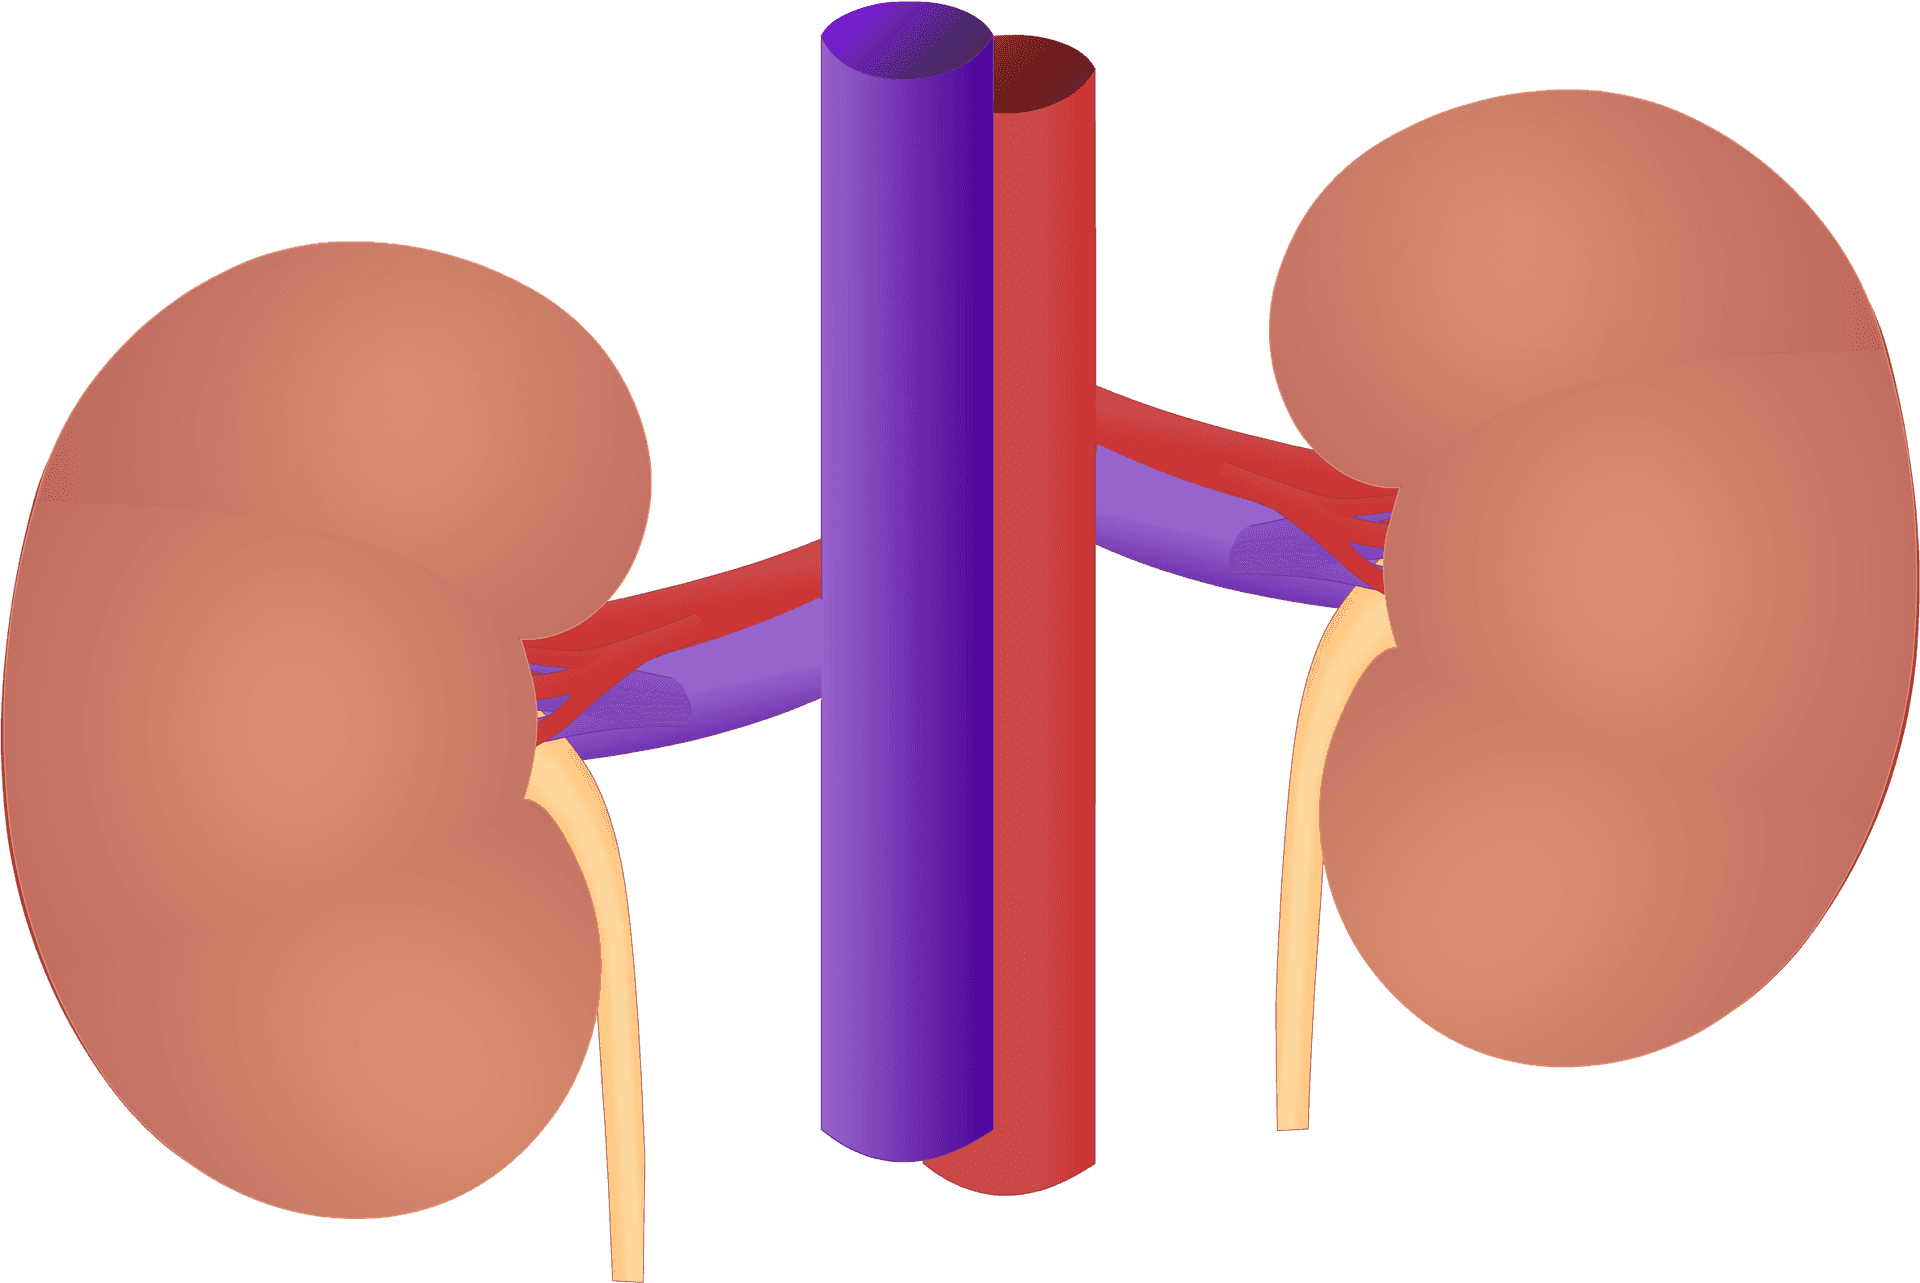 Human Kidney Anatomy Illustration PNG